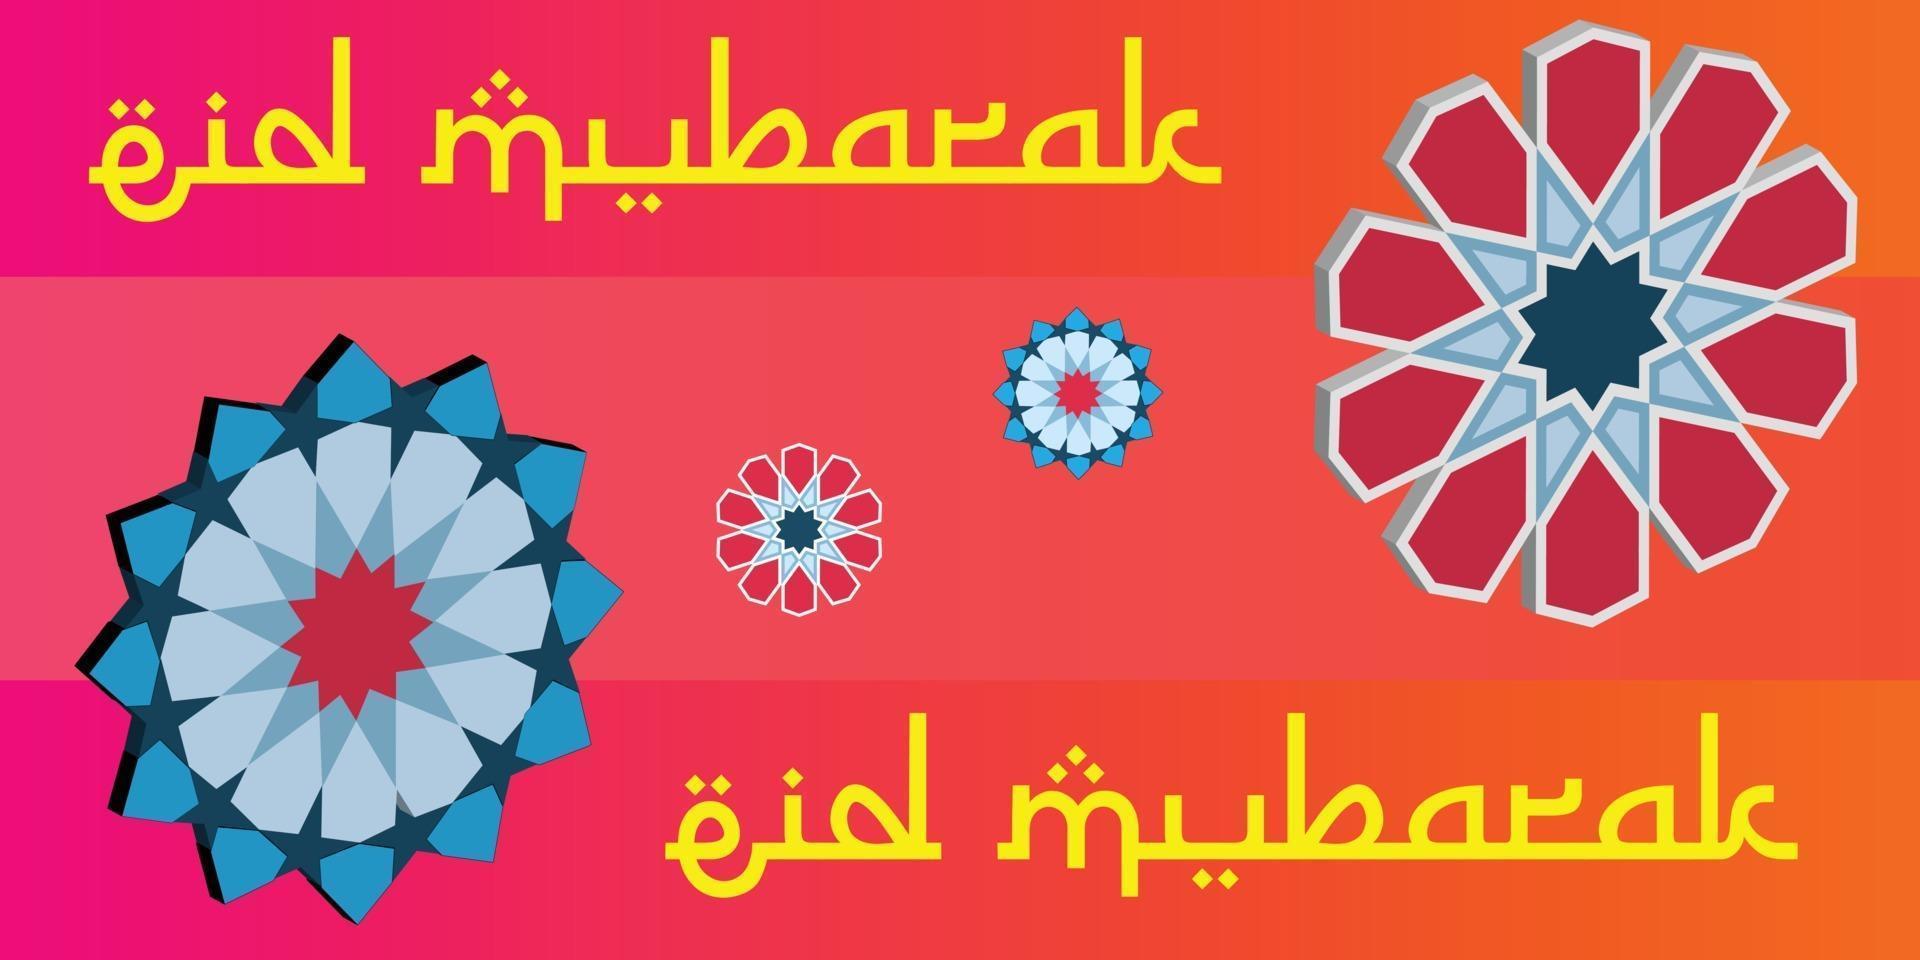 eid mubarak firande vektor